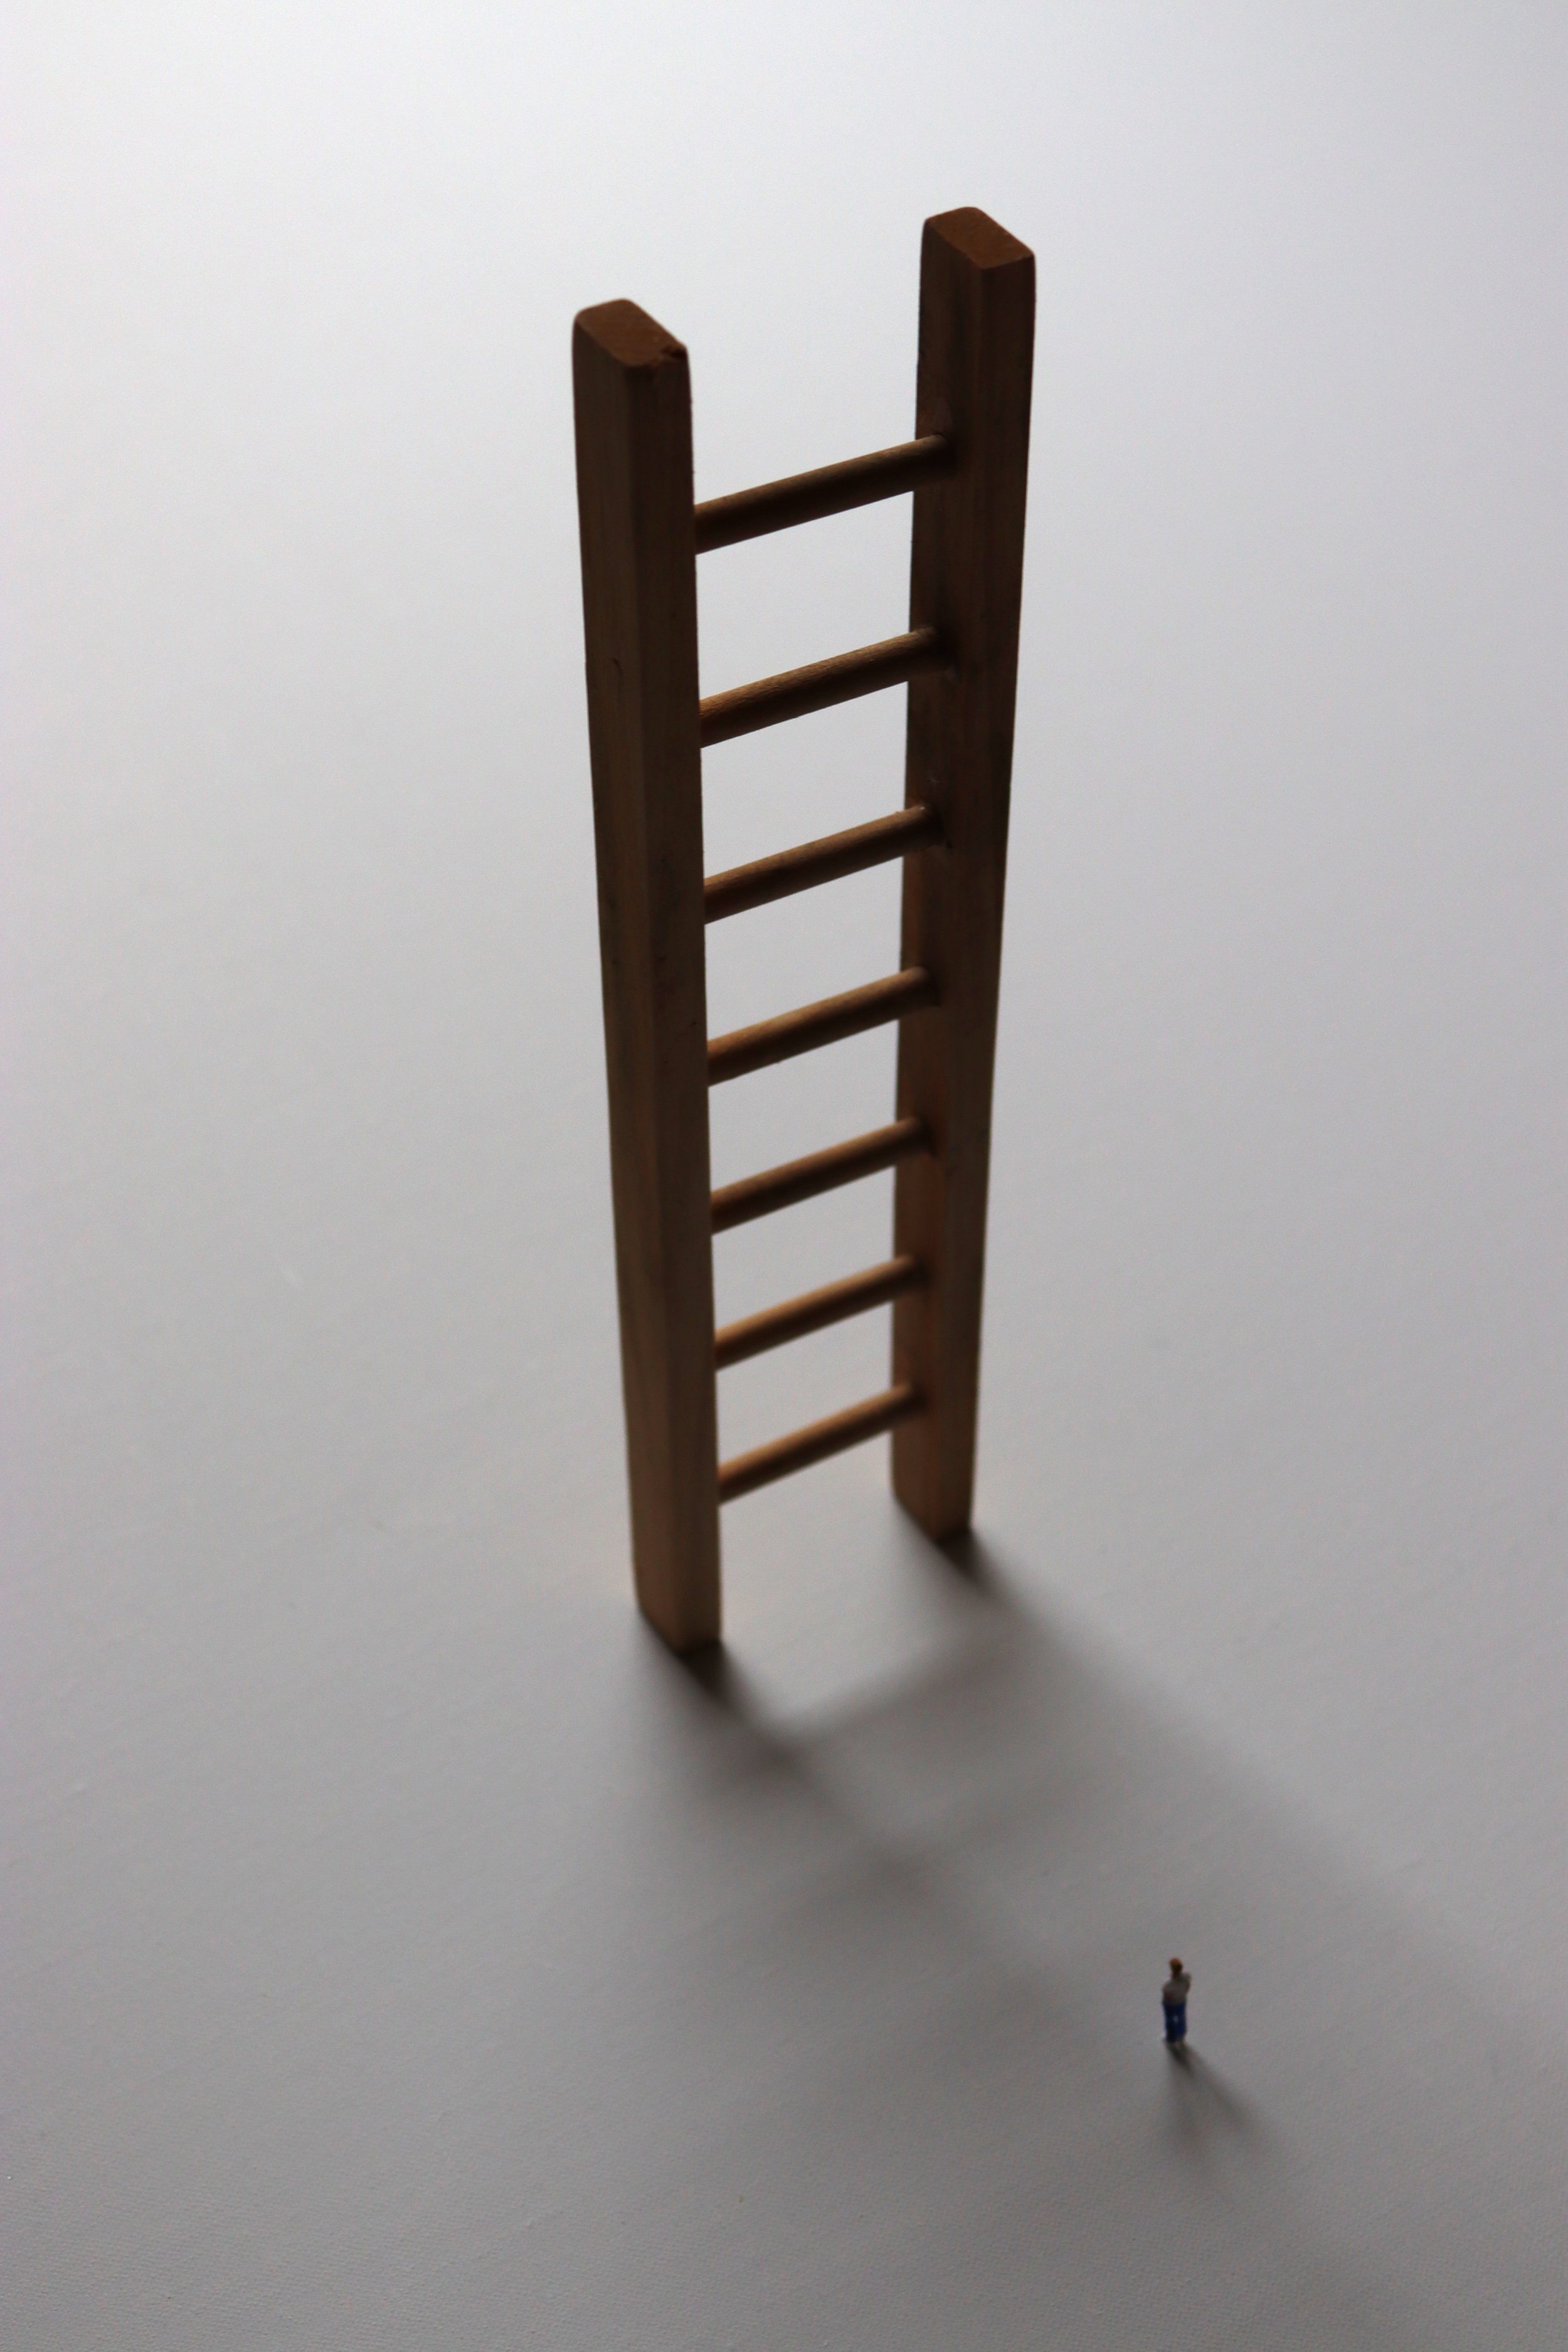 Miniature installation: Laddered